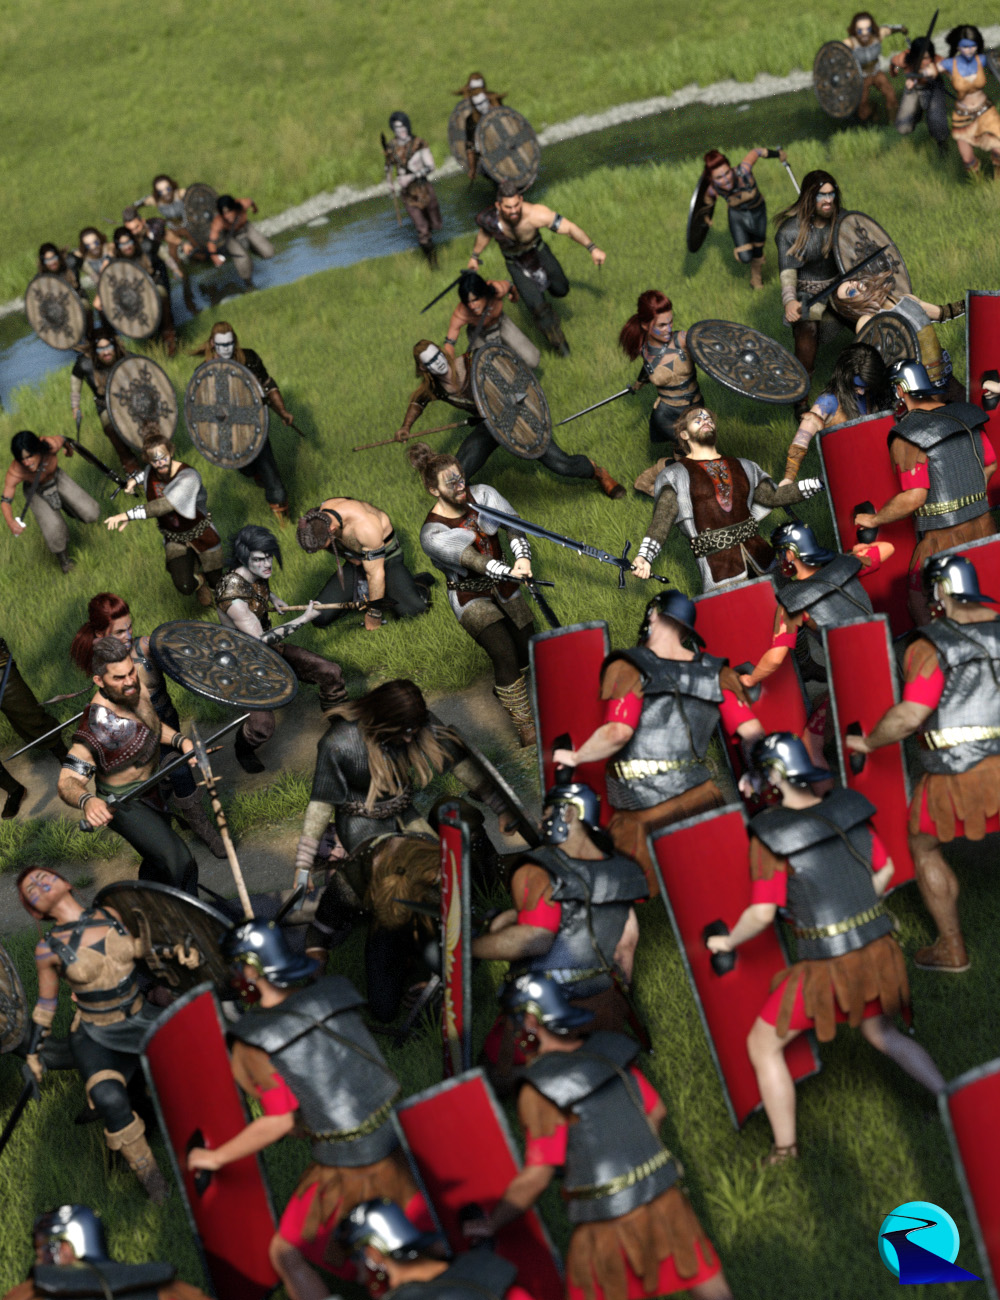 Now-Crowd Billboards - Barbarian Warriors Injured (Barbarian Warriors Vol IV)